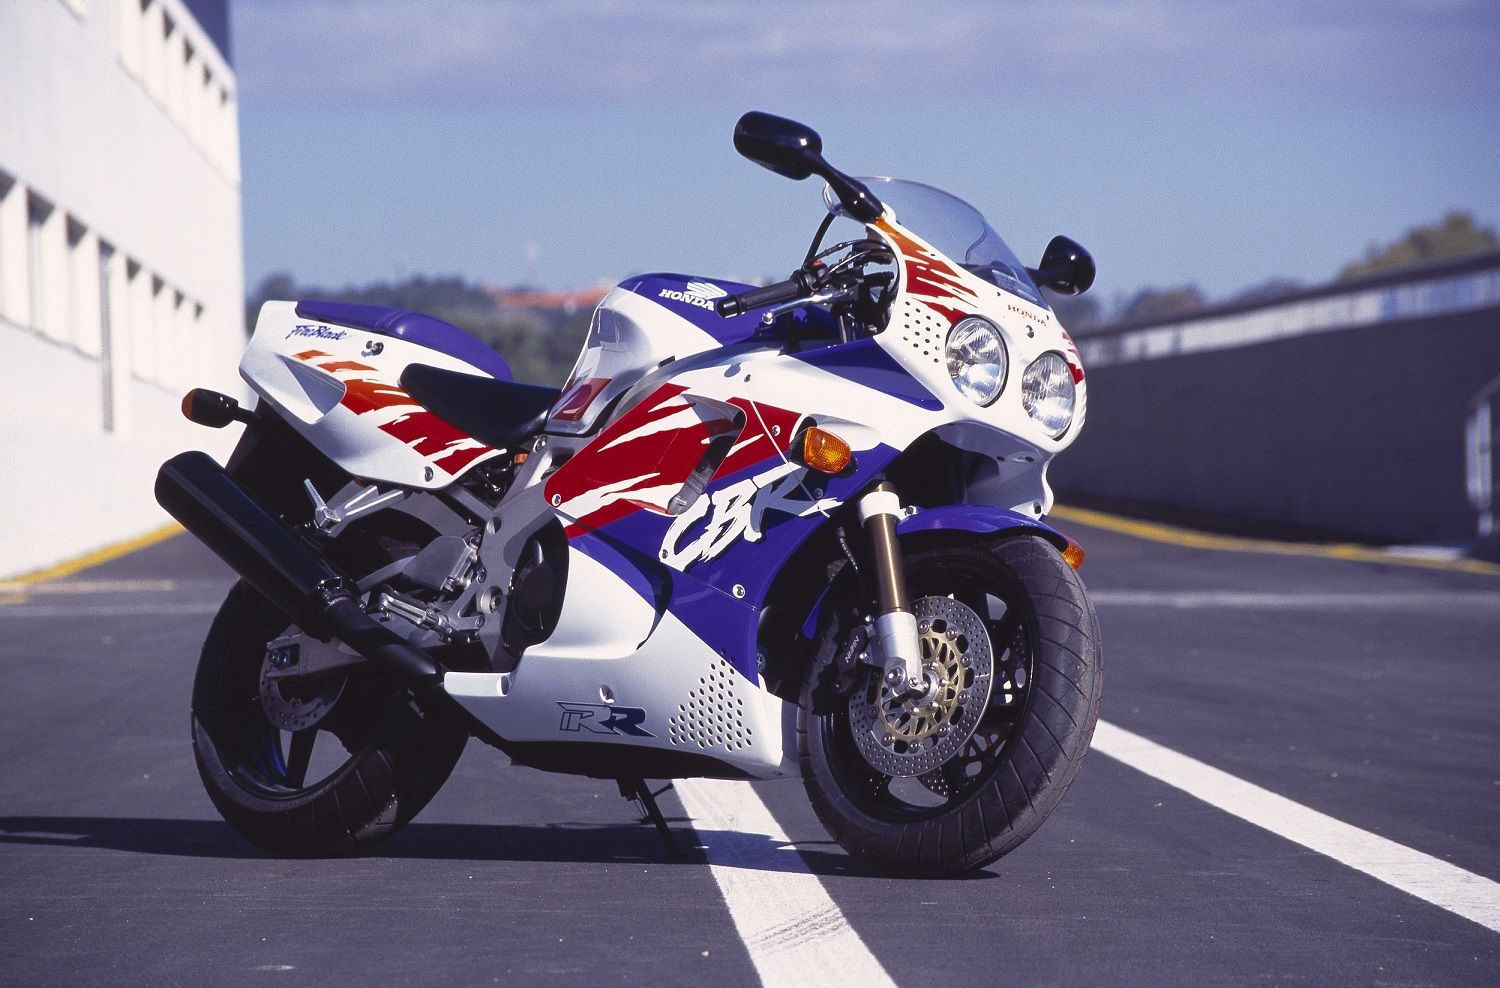 Honda-CBR900RR-Fireblade-classic-motorbikes